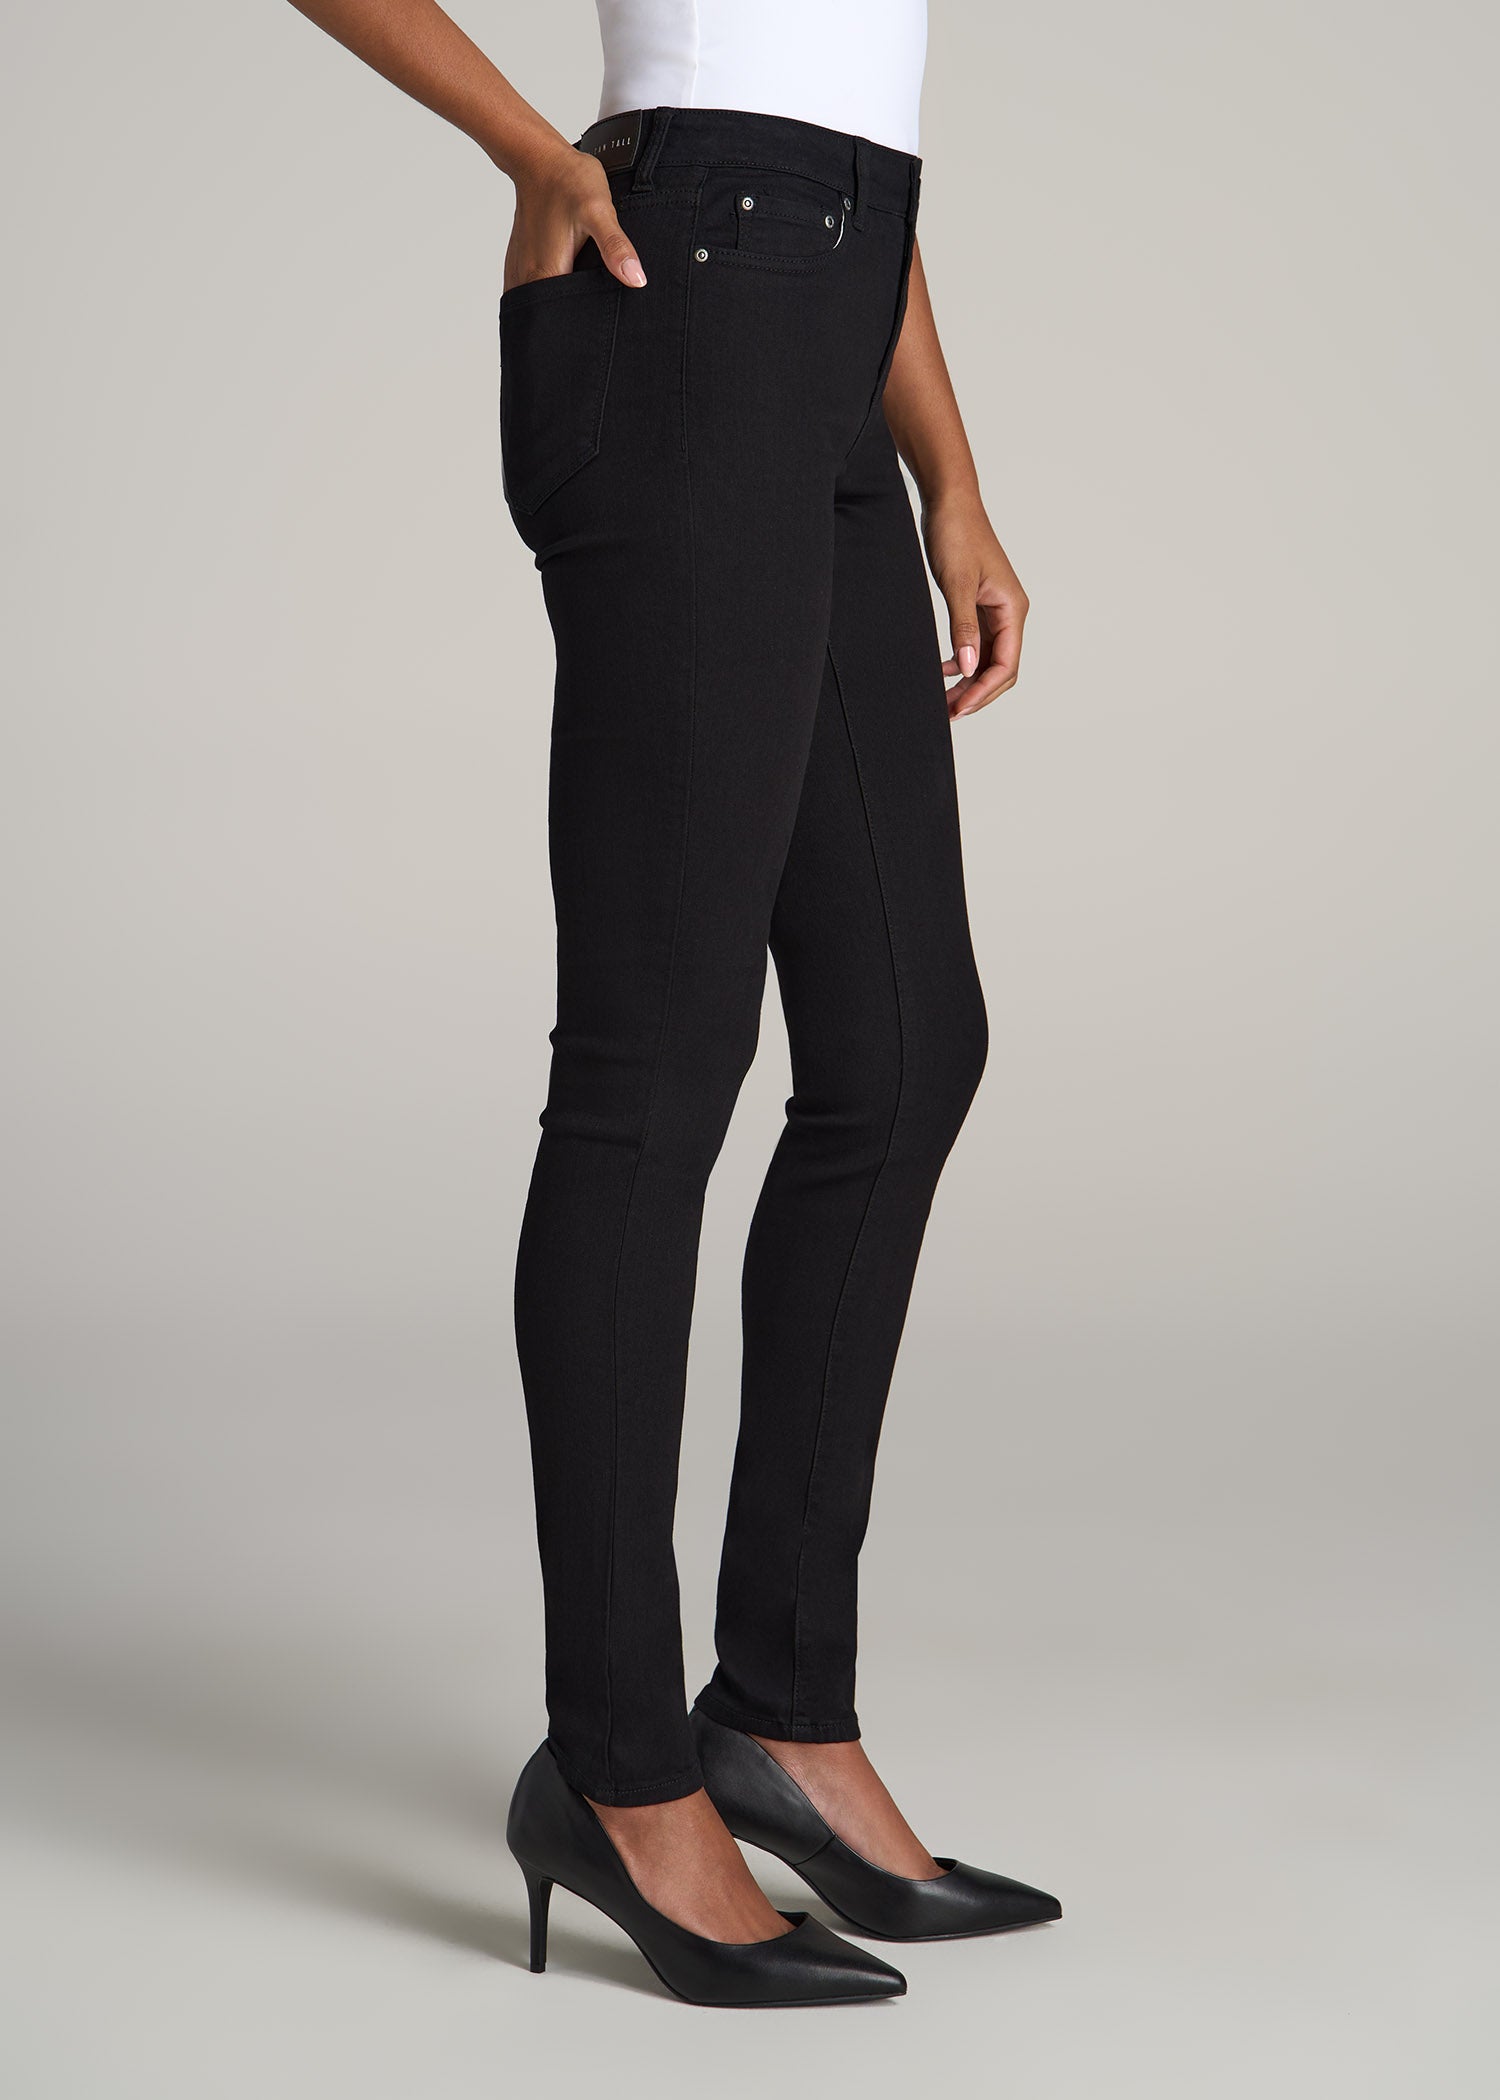 High Rise Skinny Tall Women's Jean in Black 28x37 / Black